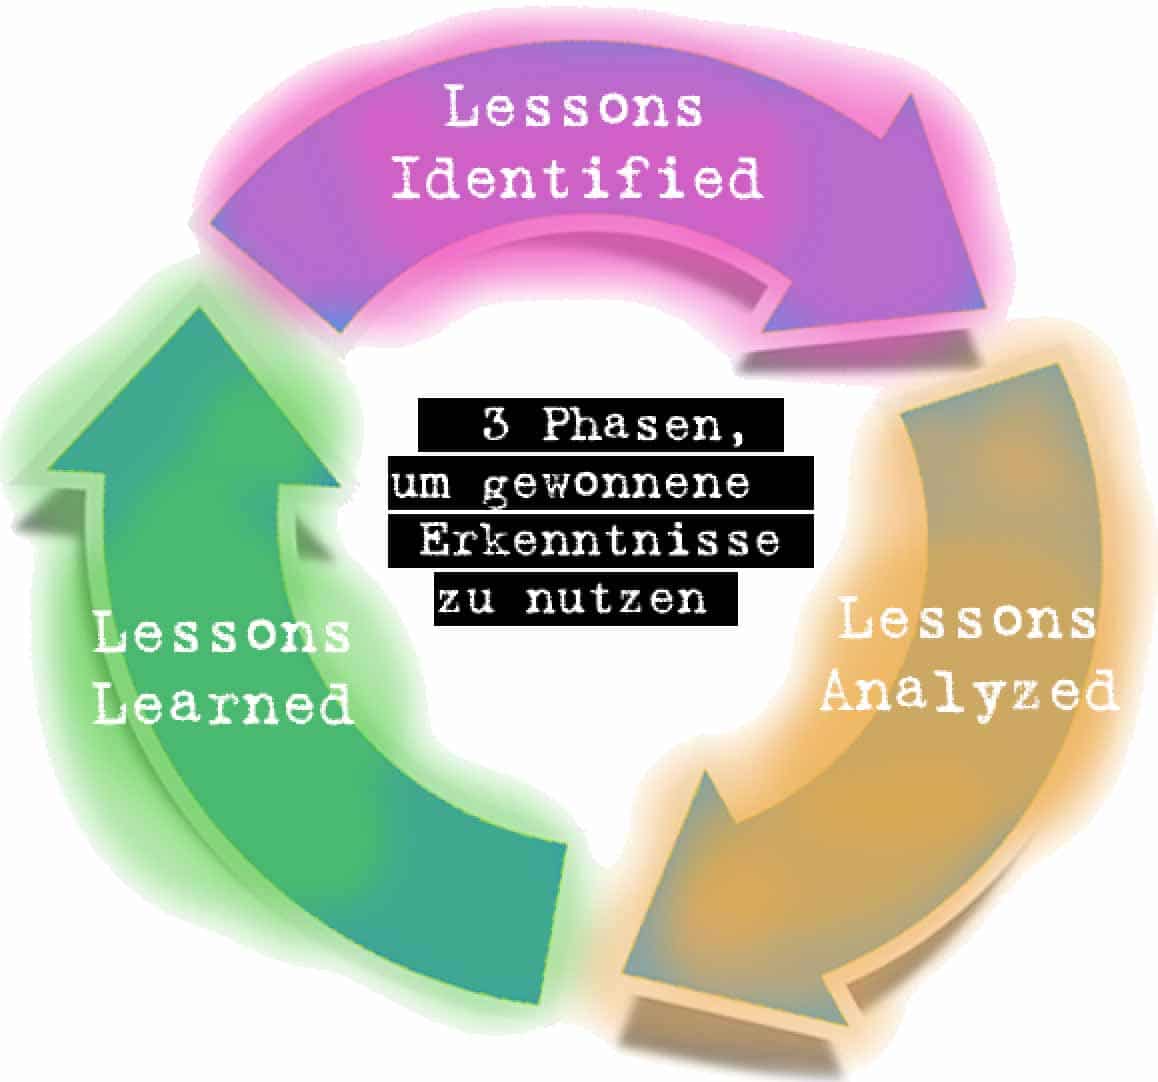 Lessons Learned - Erkenntnisse gewinnen in drei Phasen